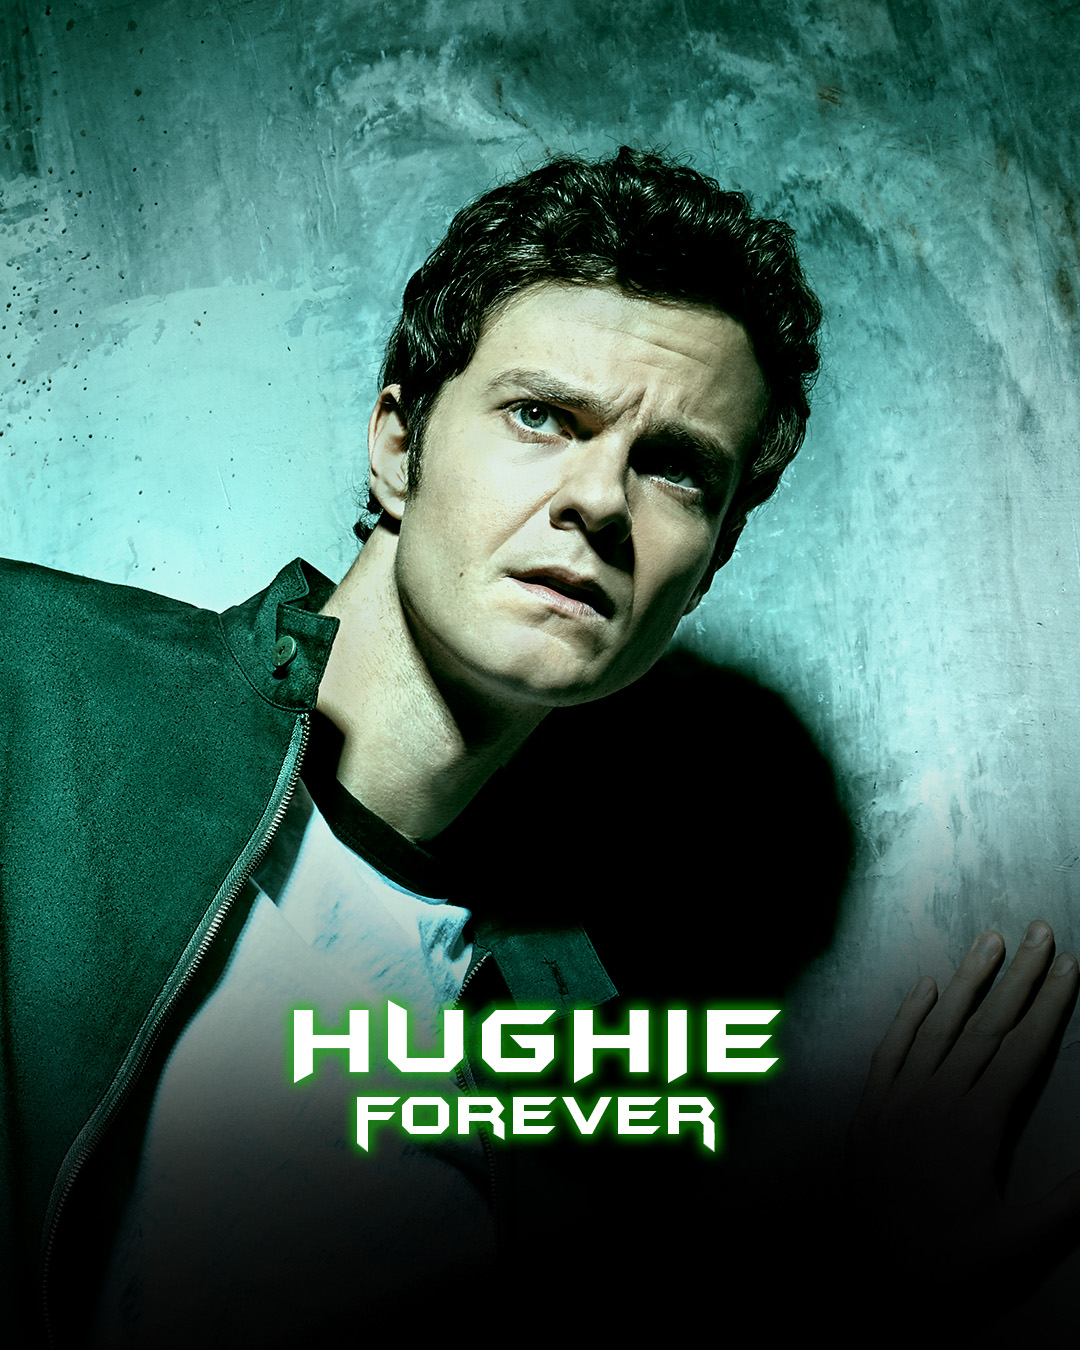 Hughie/Batman Forever